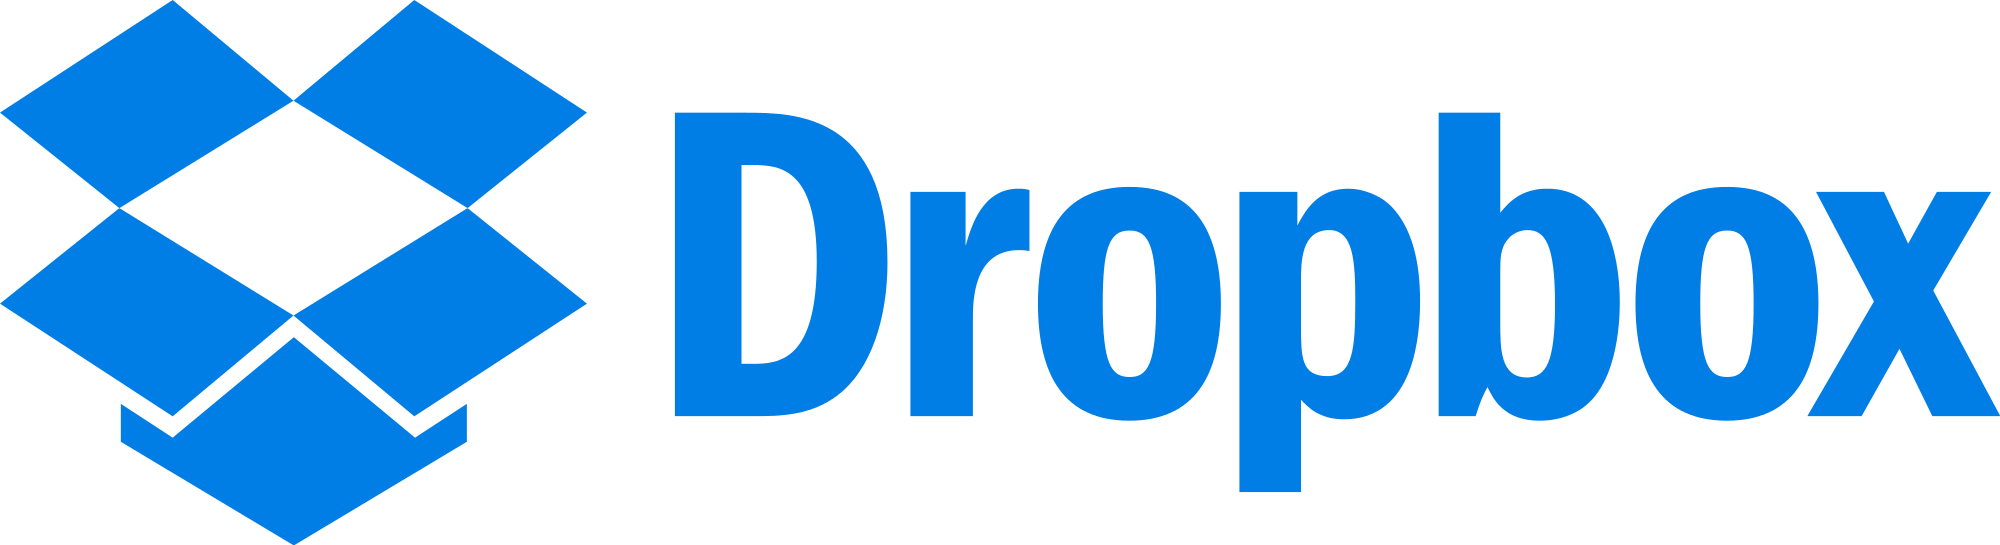 Dropbox.com Logo - Dropbox logo (2013).svg